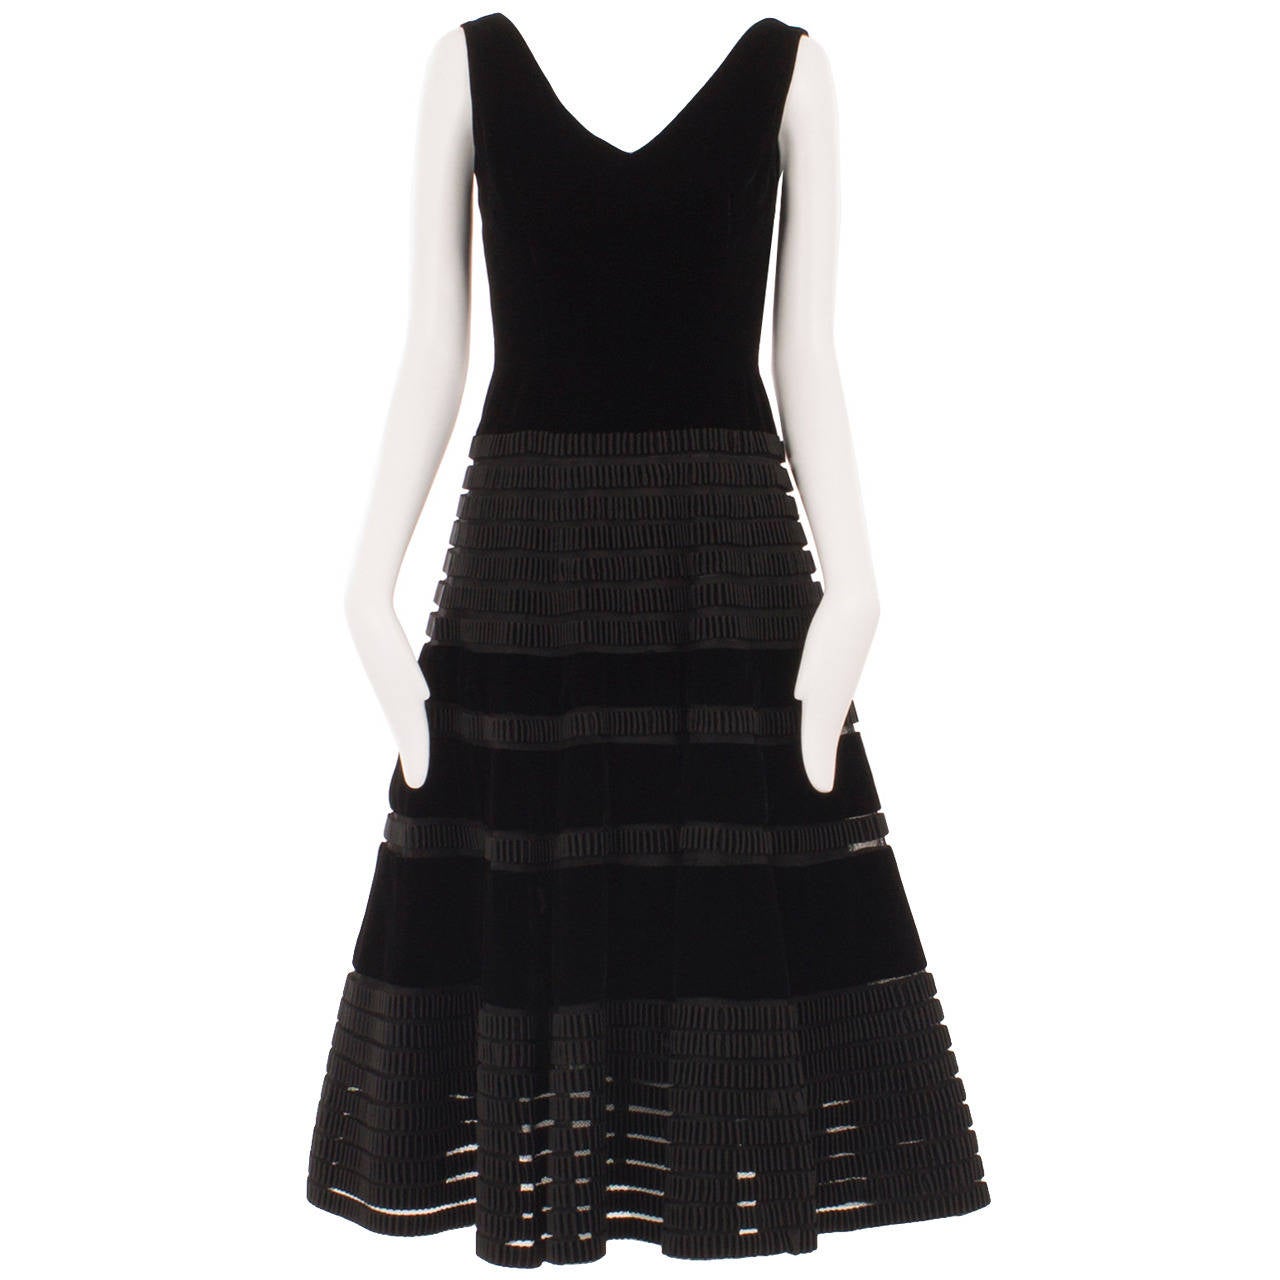 Pierre Balmain Couture Black Velvet Dress, Circa 1955 For Sale